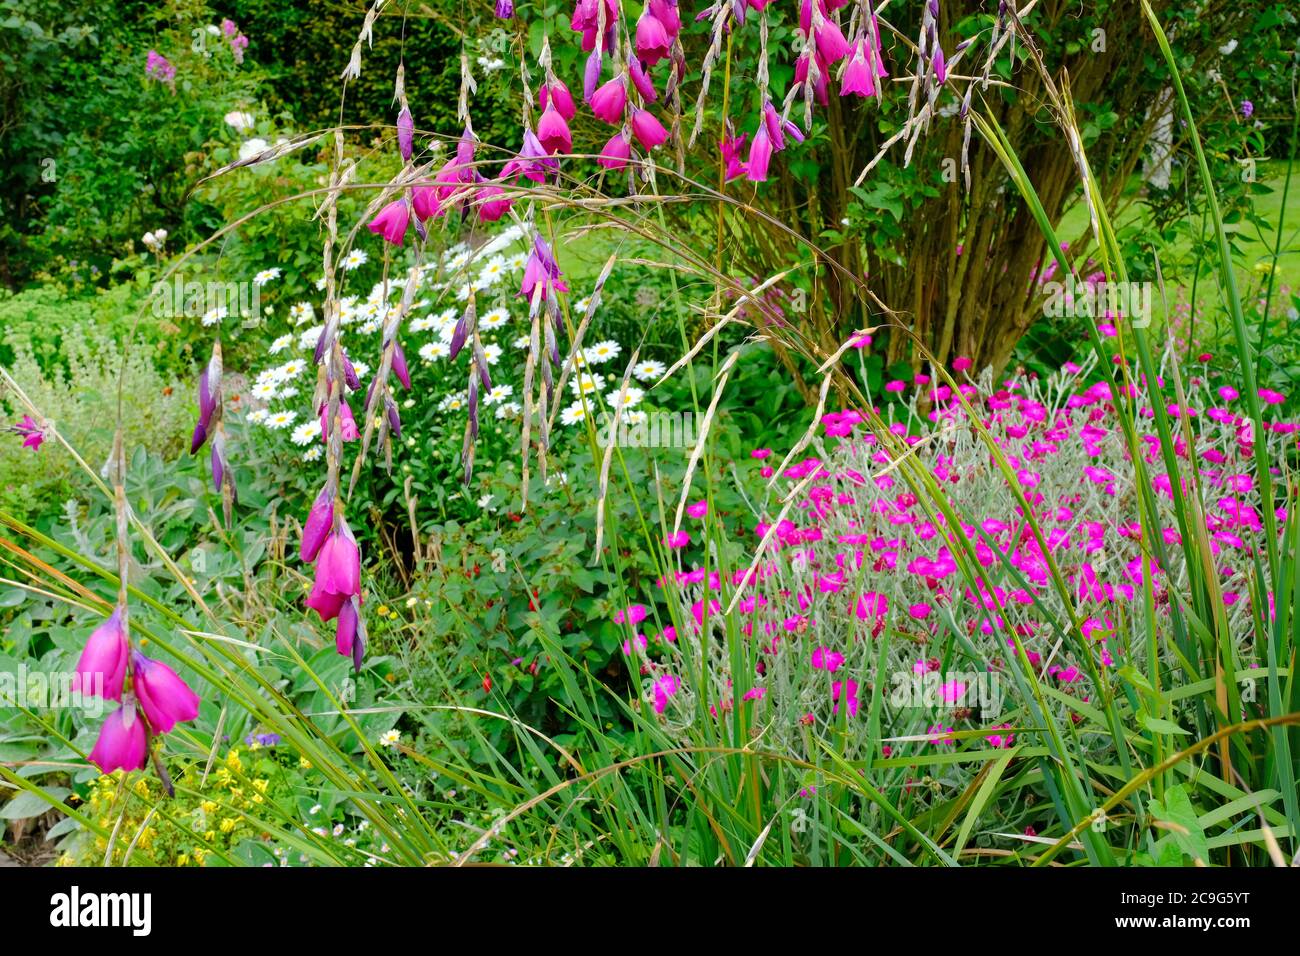 Lush English summer flower garden Stock Photo